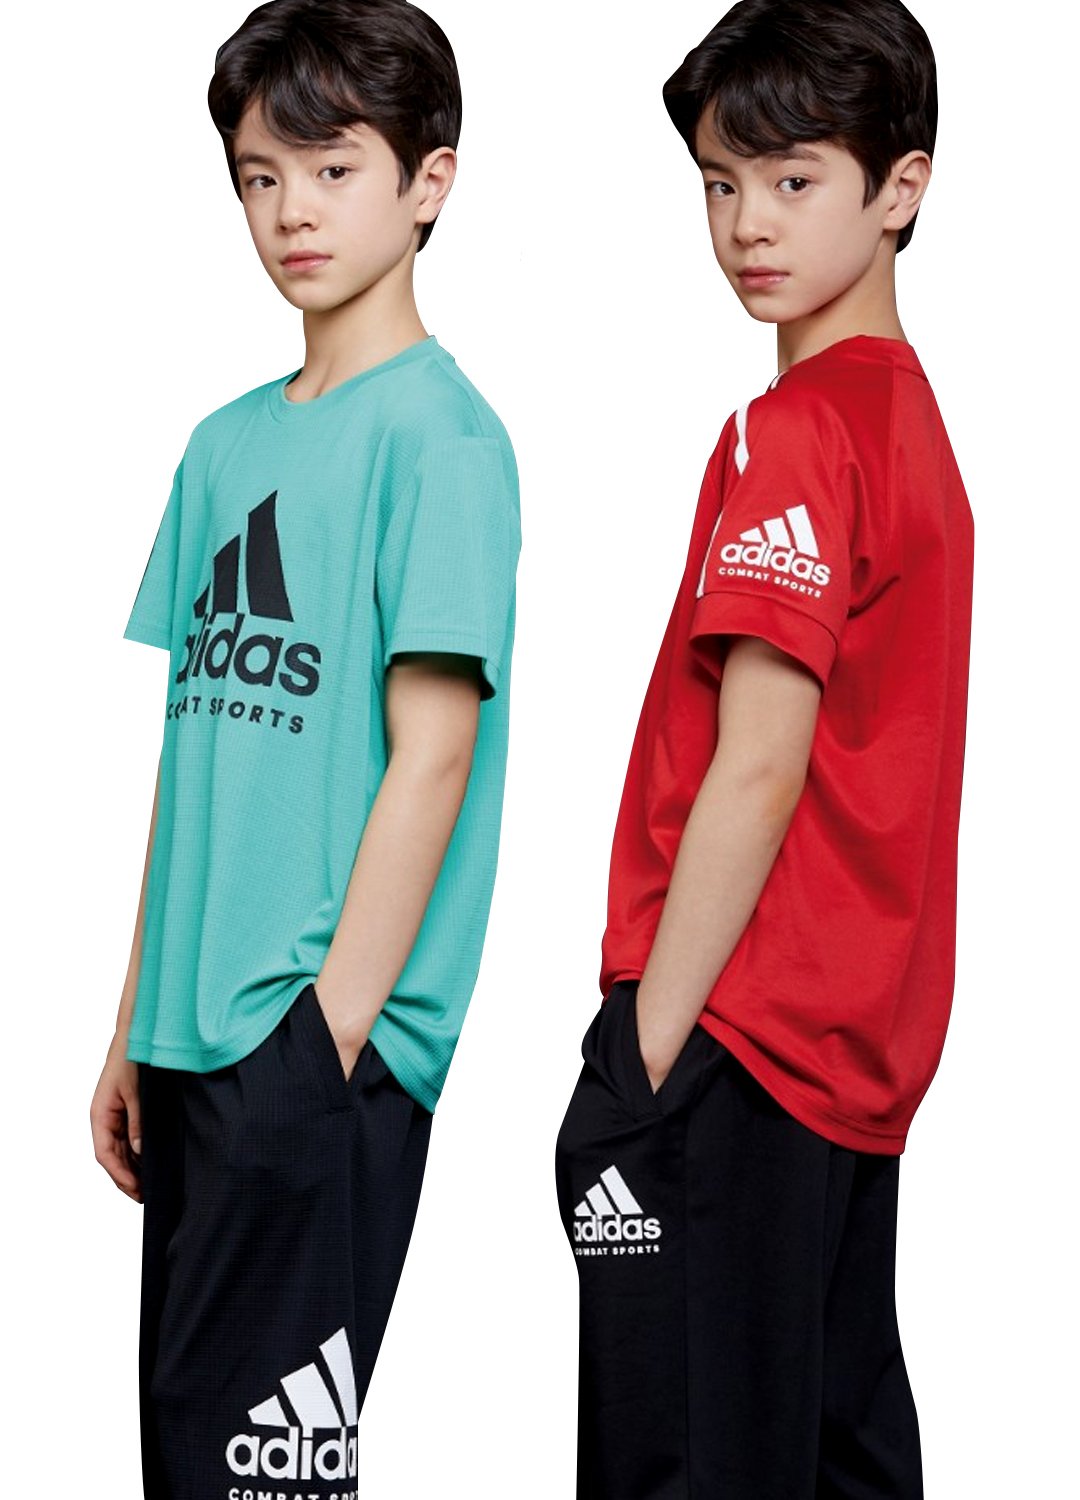 adidas Youth Summer Teamwear – 4pc Set